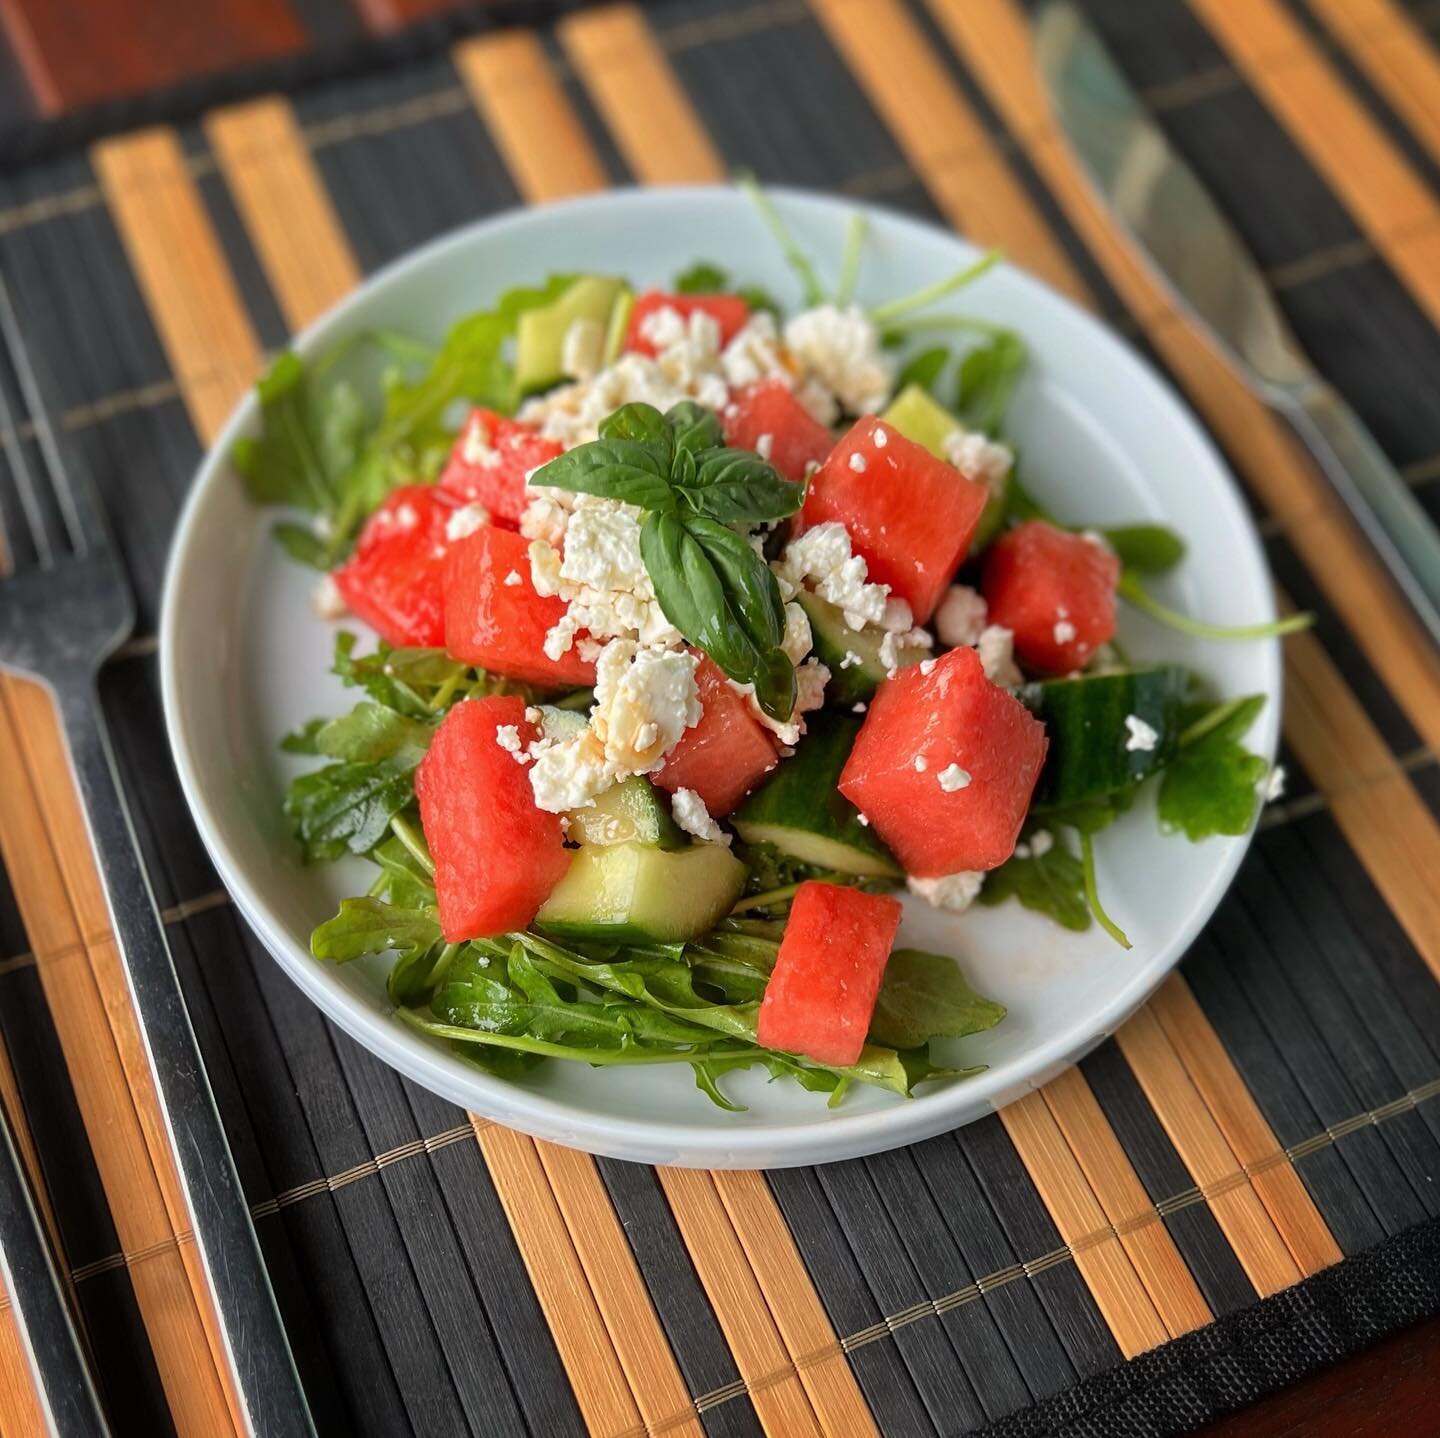 Fresh Watermelon, Cucumber &amp; Feta Salad on a bed of Arugula, Scratch Dressing &amp; Basil 🌿 and Mint from Garden
.
#patiodinner

.
.
#dinner #salad #medium #yum #yummy #yumyum #homemade #eat #eatbetter #food #foodporn #recipe #sharefood #delicio